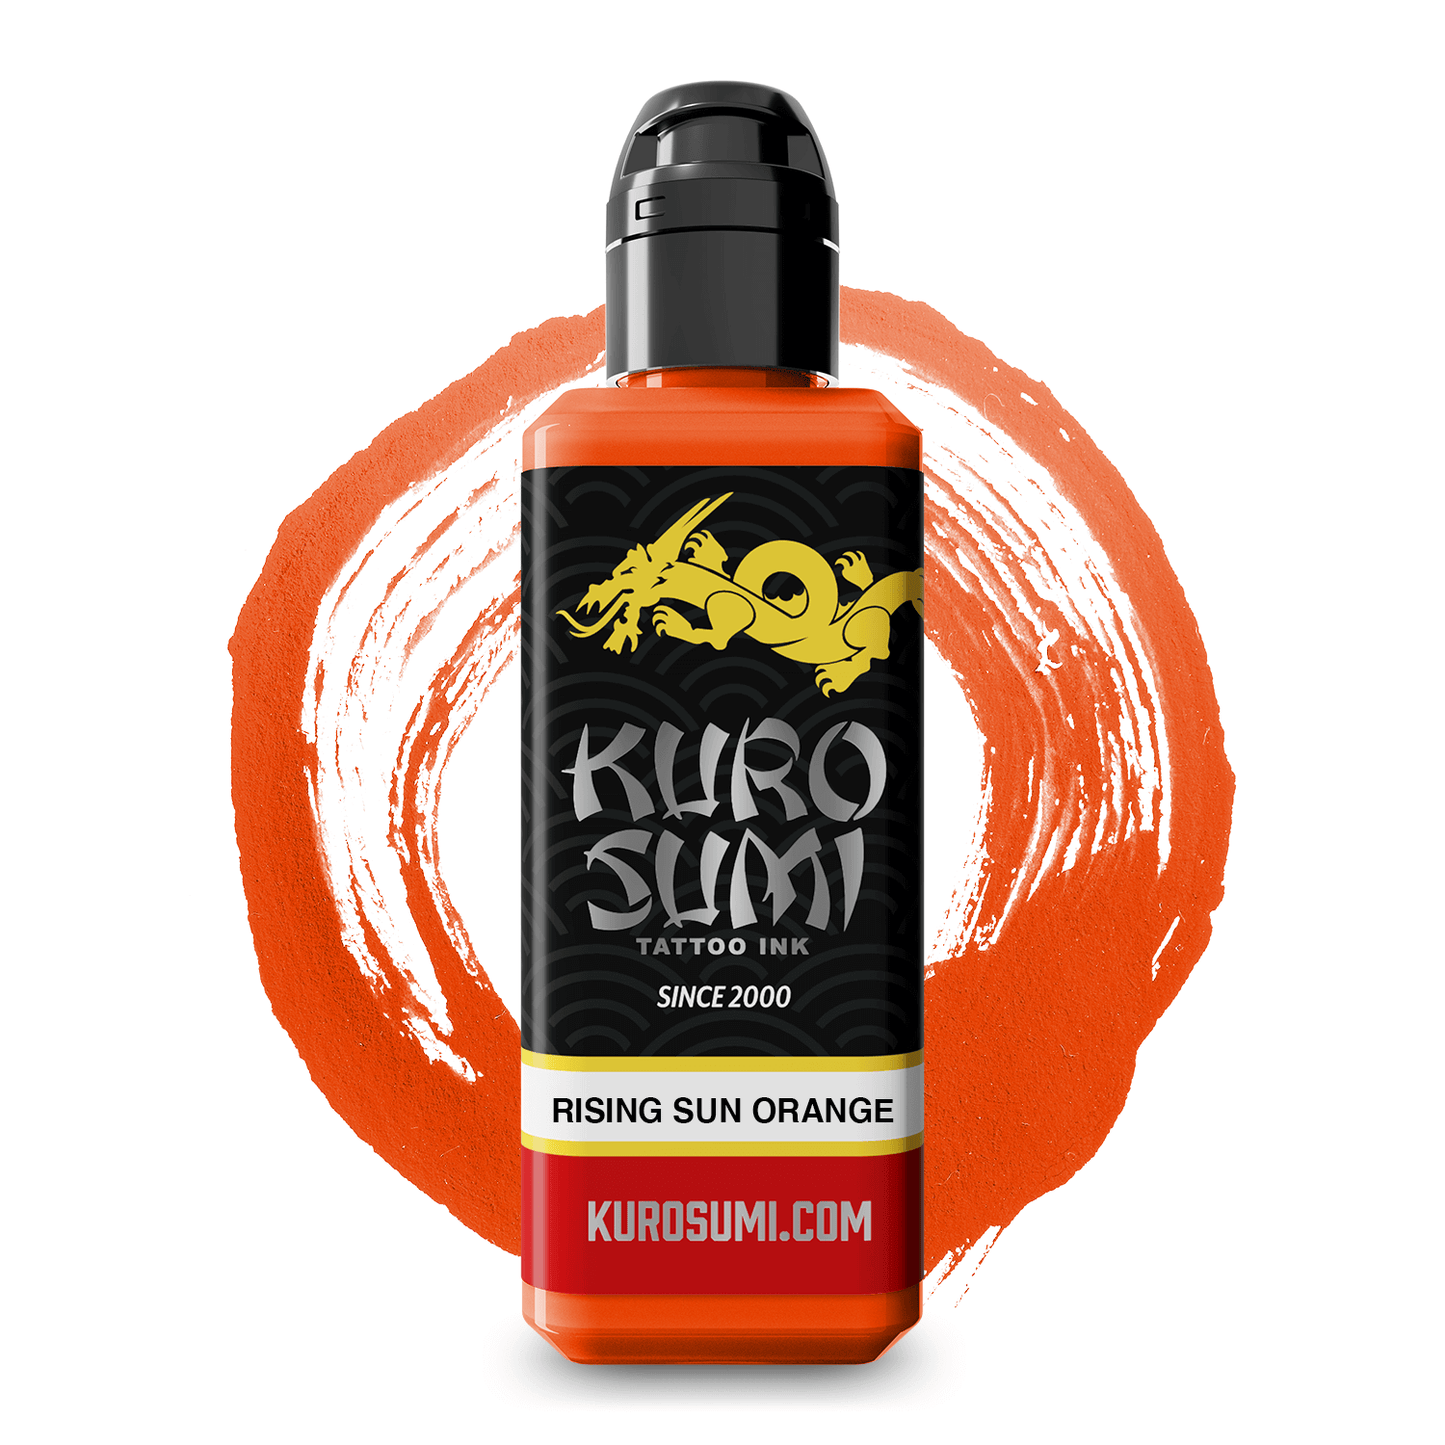 KSRSO Kuro Sumi Rising Sun Orange 3oz